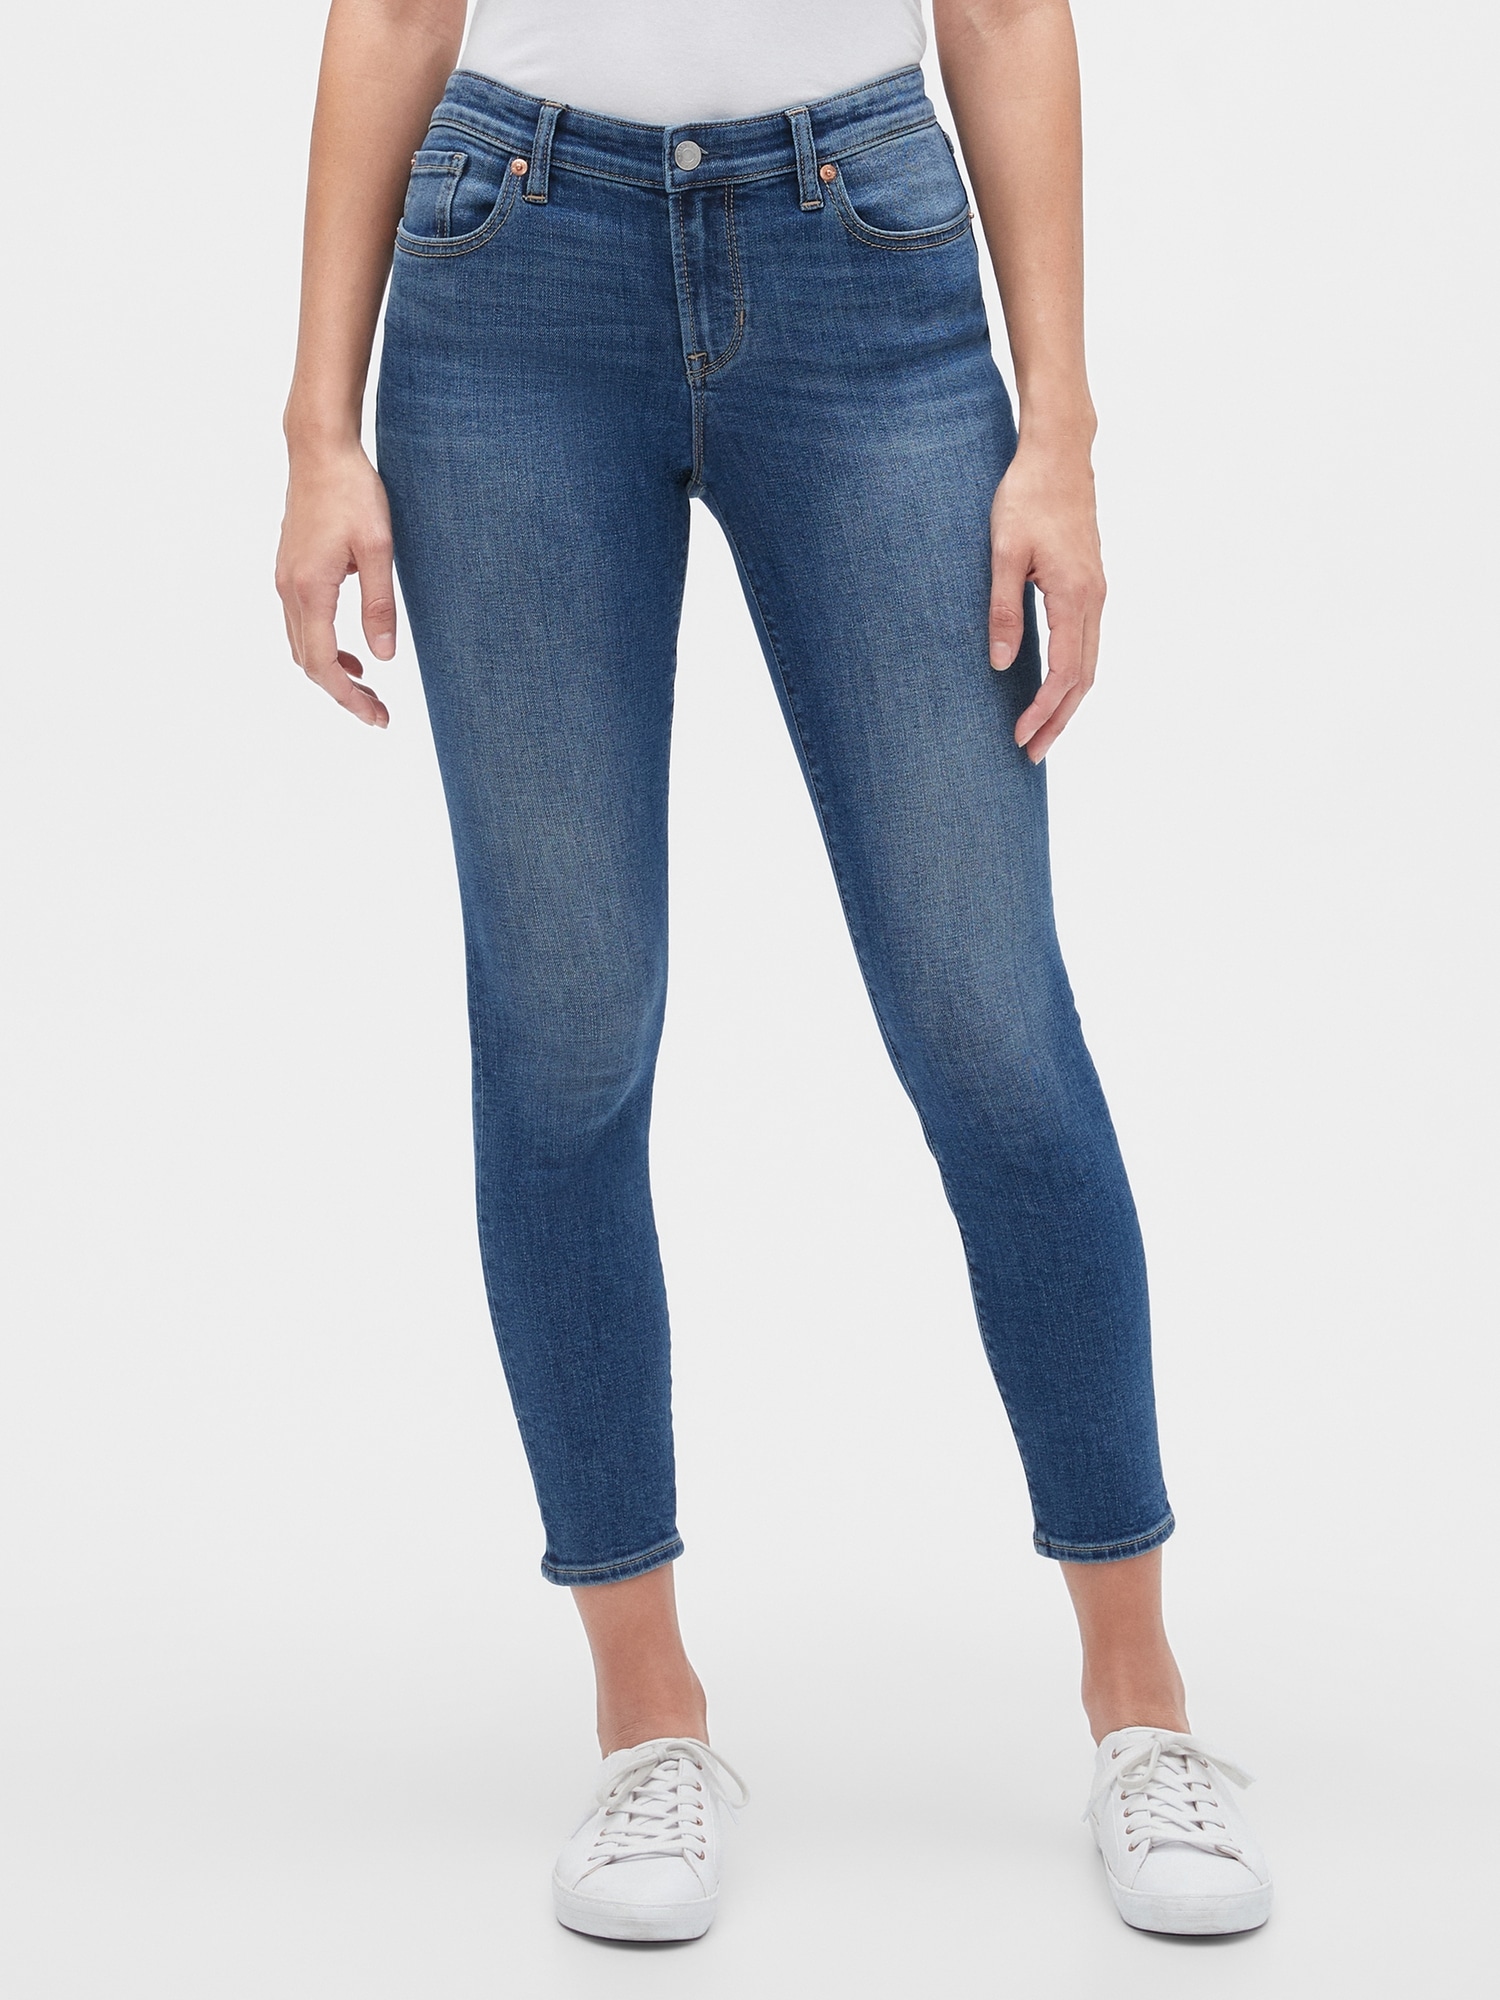 gap skimmer jeans